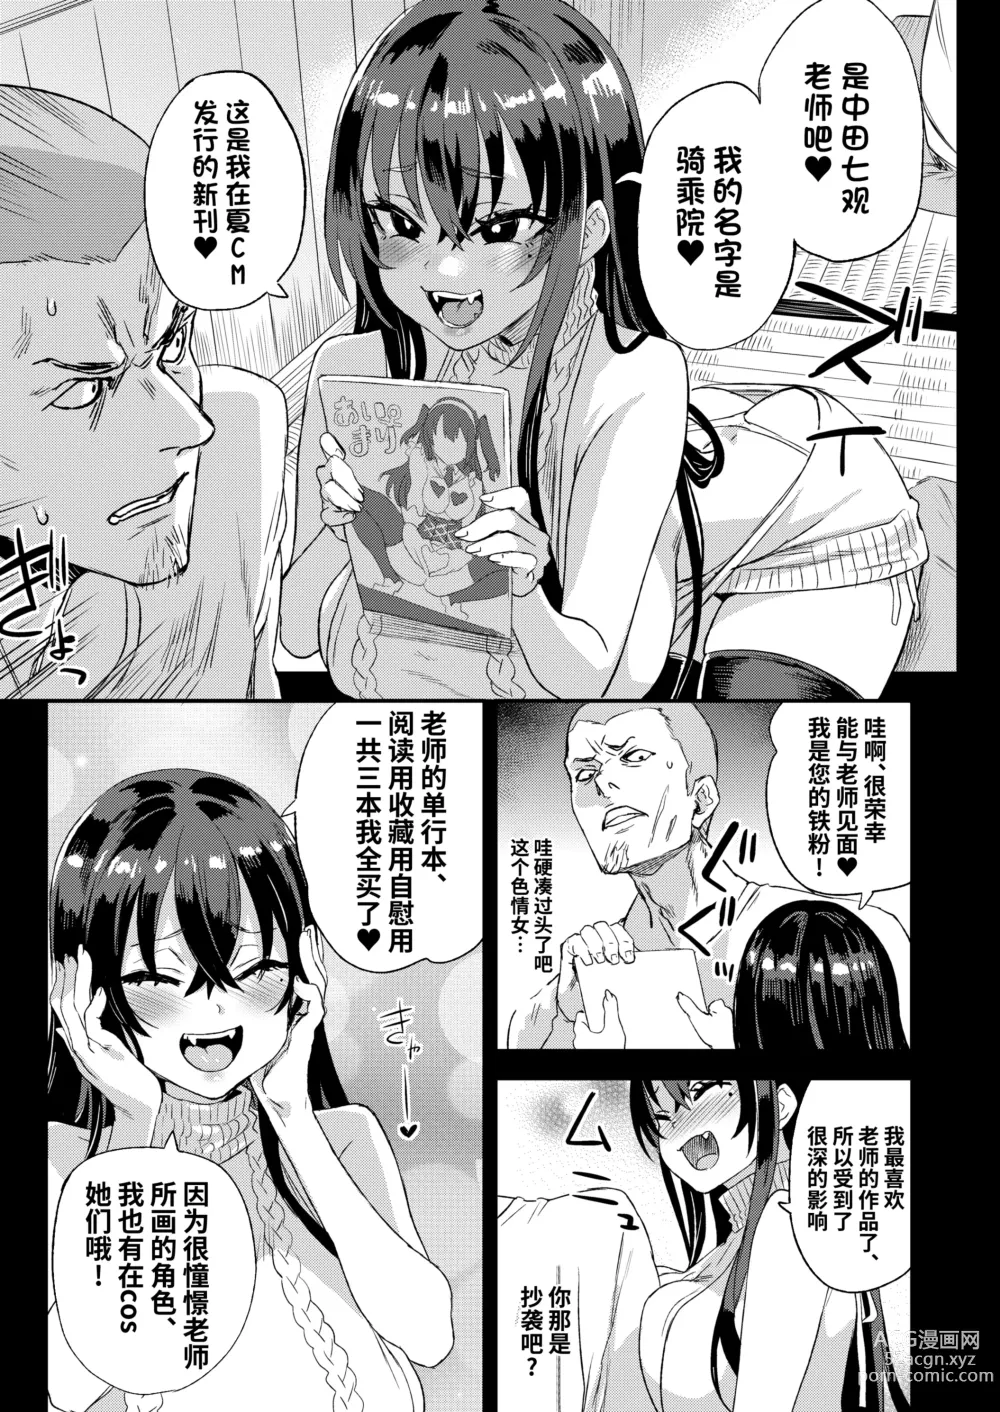 Page 7 of doujinshi 骑乘院老师的色情漫画脑